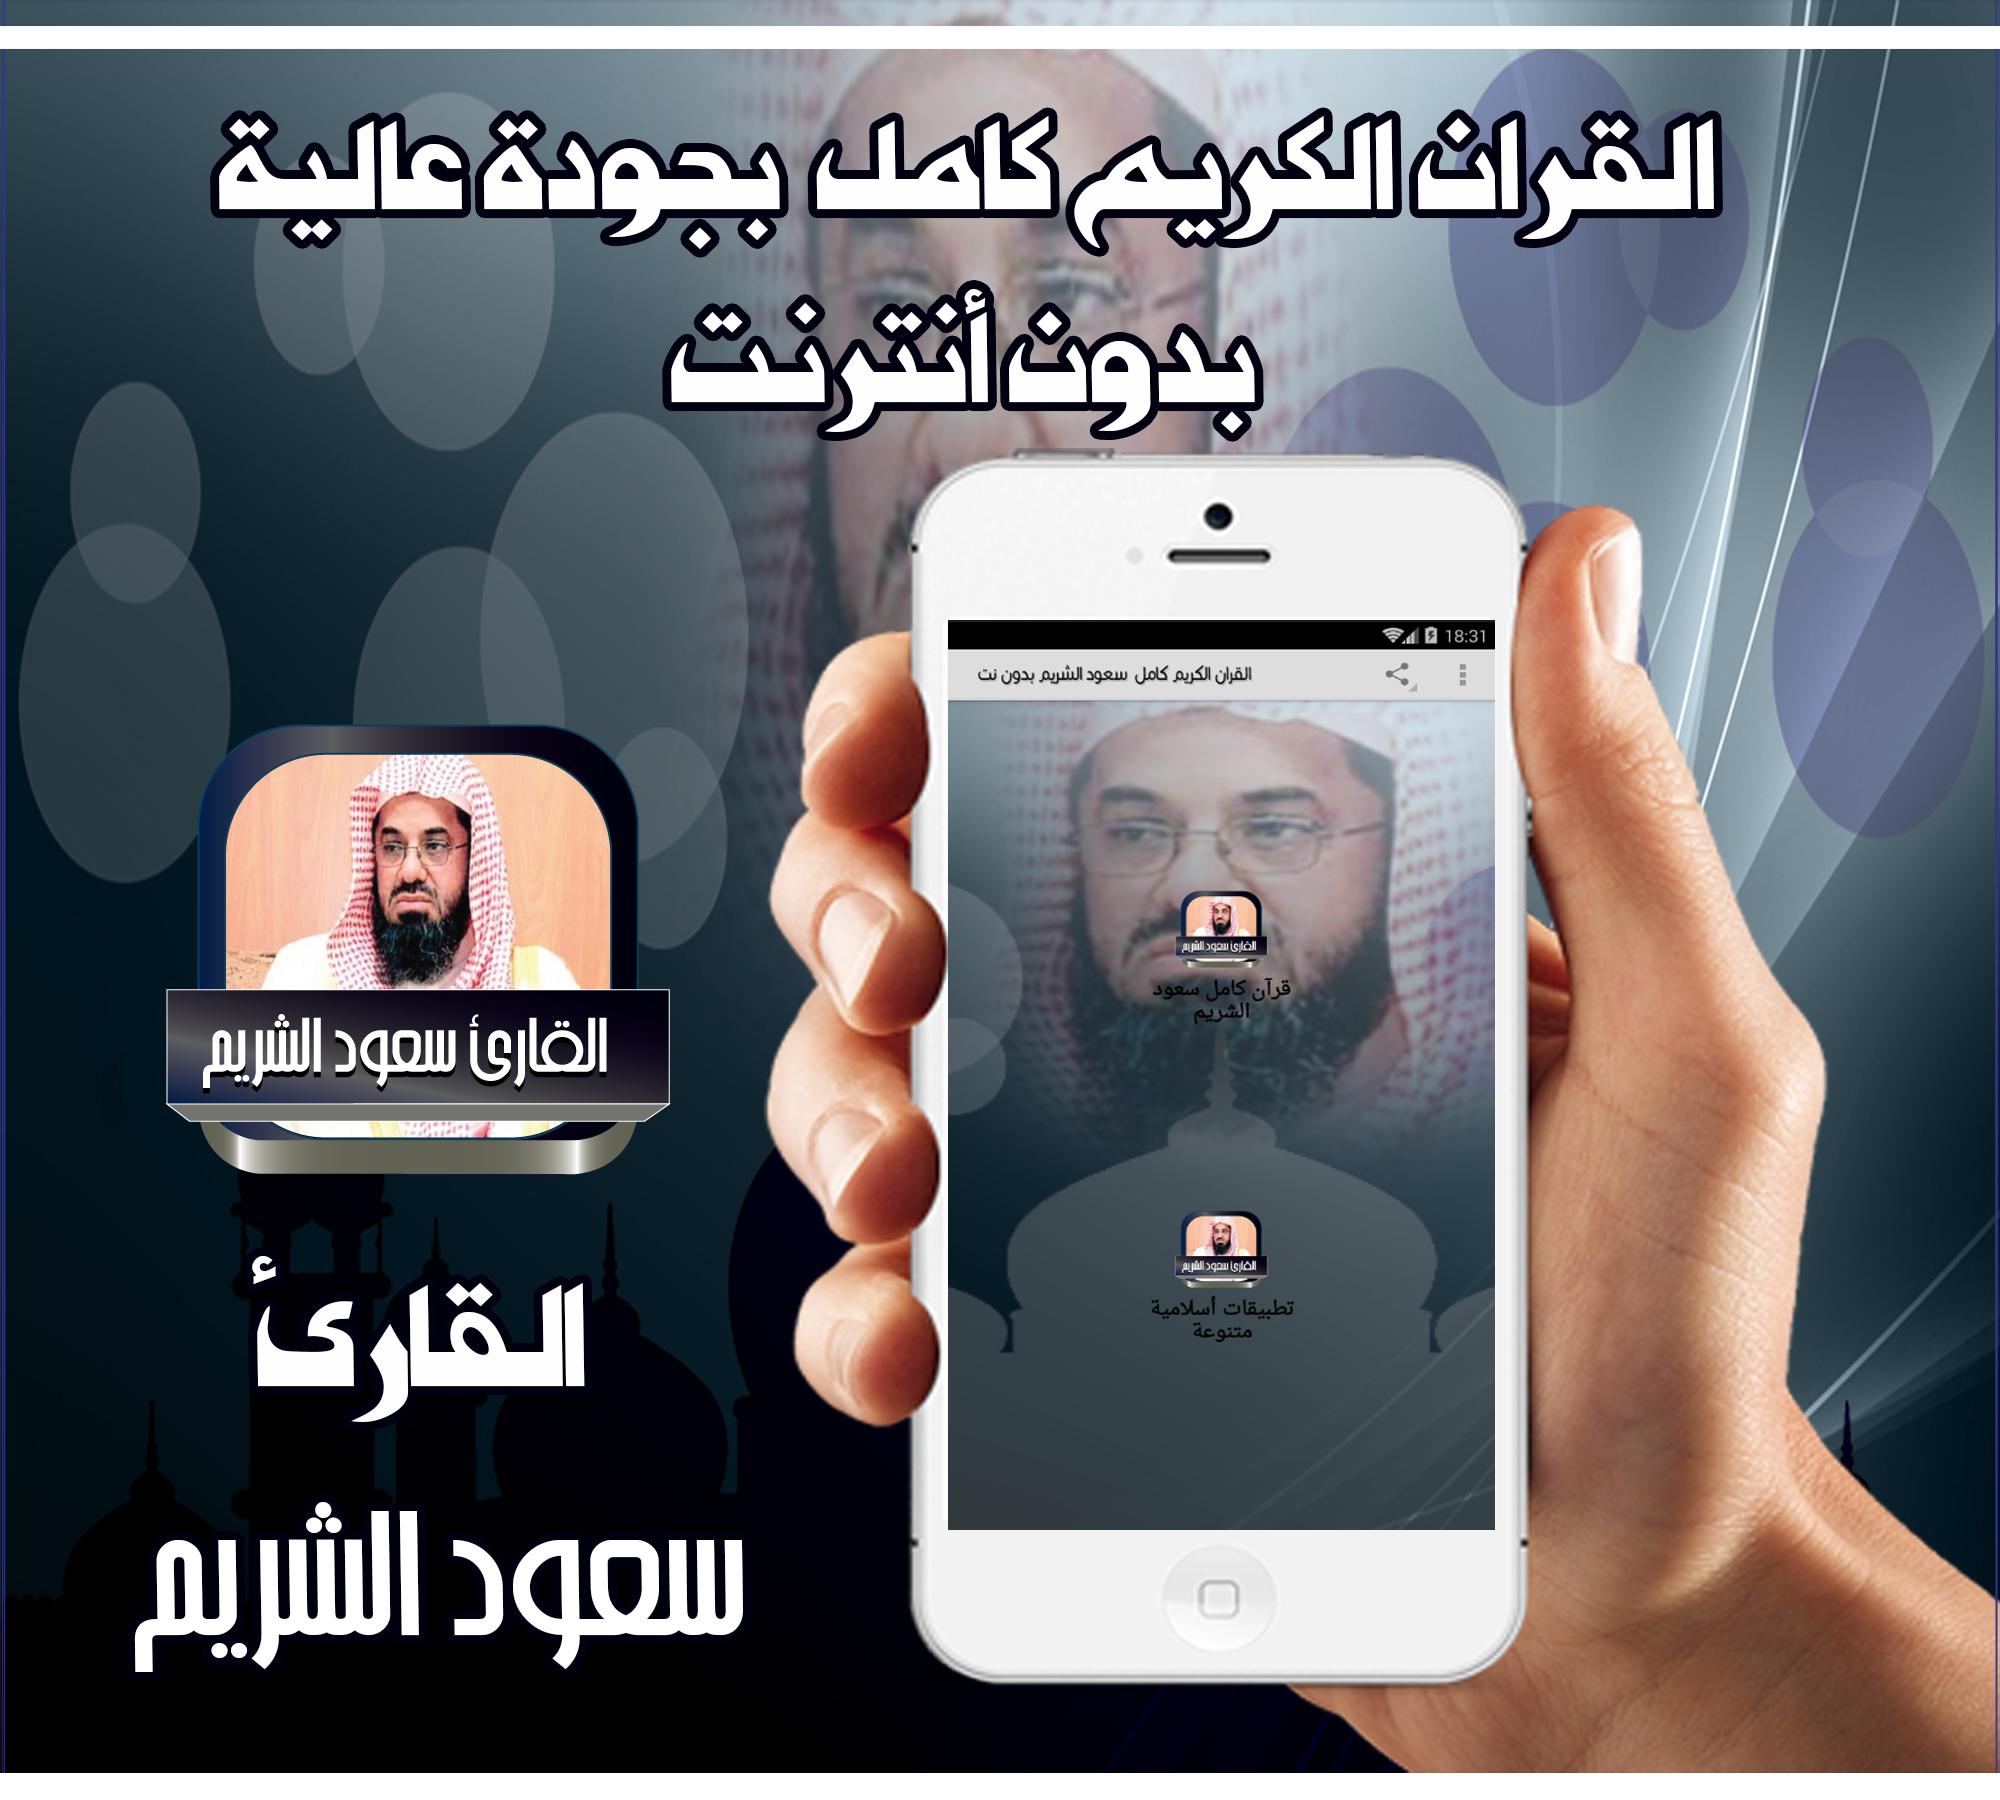 قرآن كامل سعود الشريم بدون نت for Android - APK Download